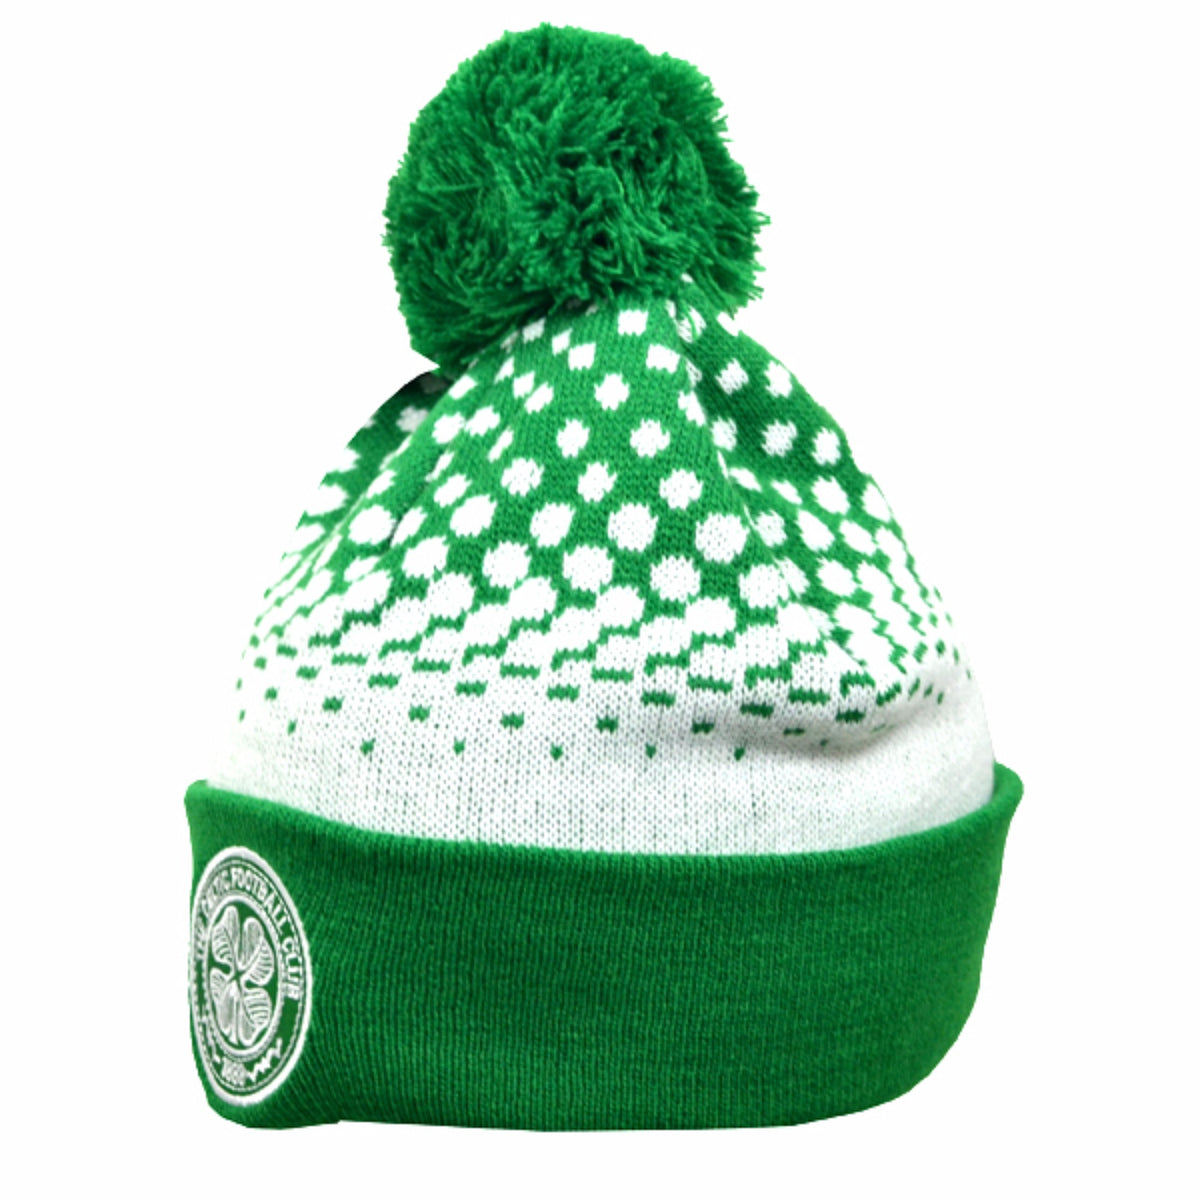 Celtic FC Winter Hat 